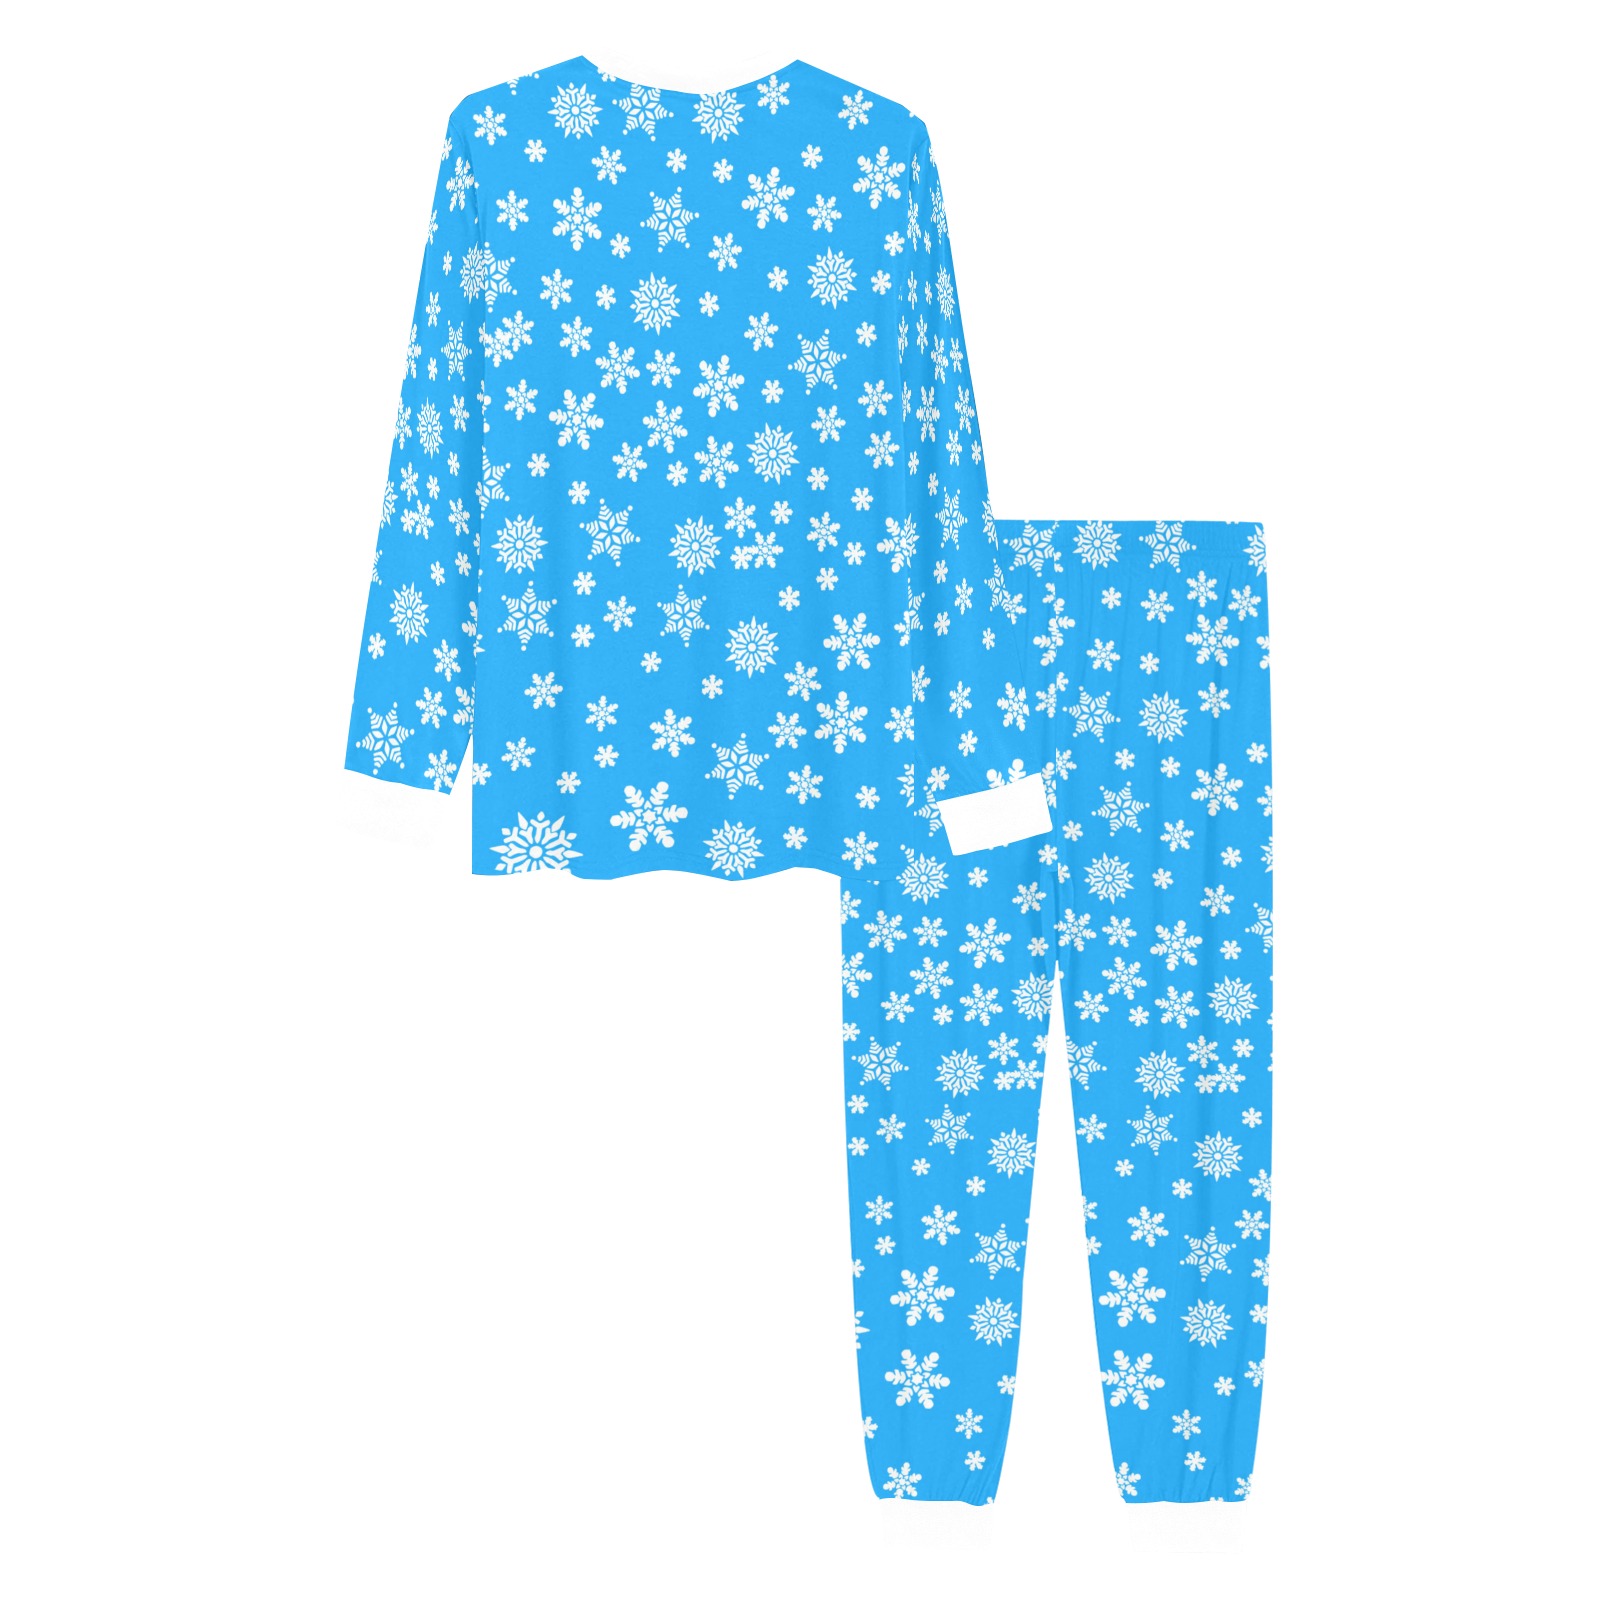 Christmas White Snowflakes on Light Blue Men's All Over Print Pajama Set